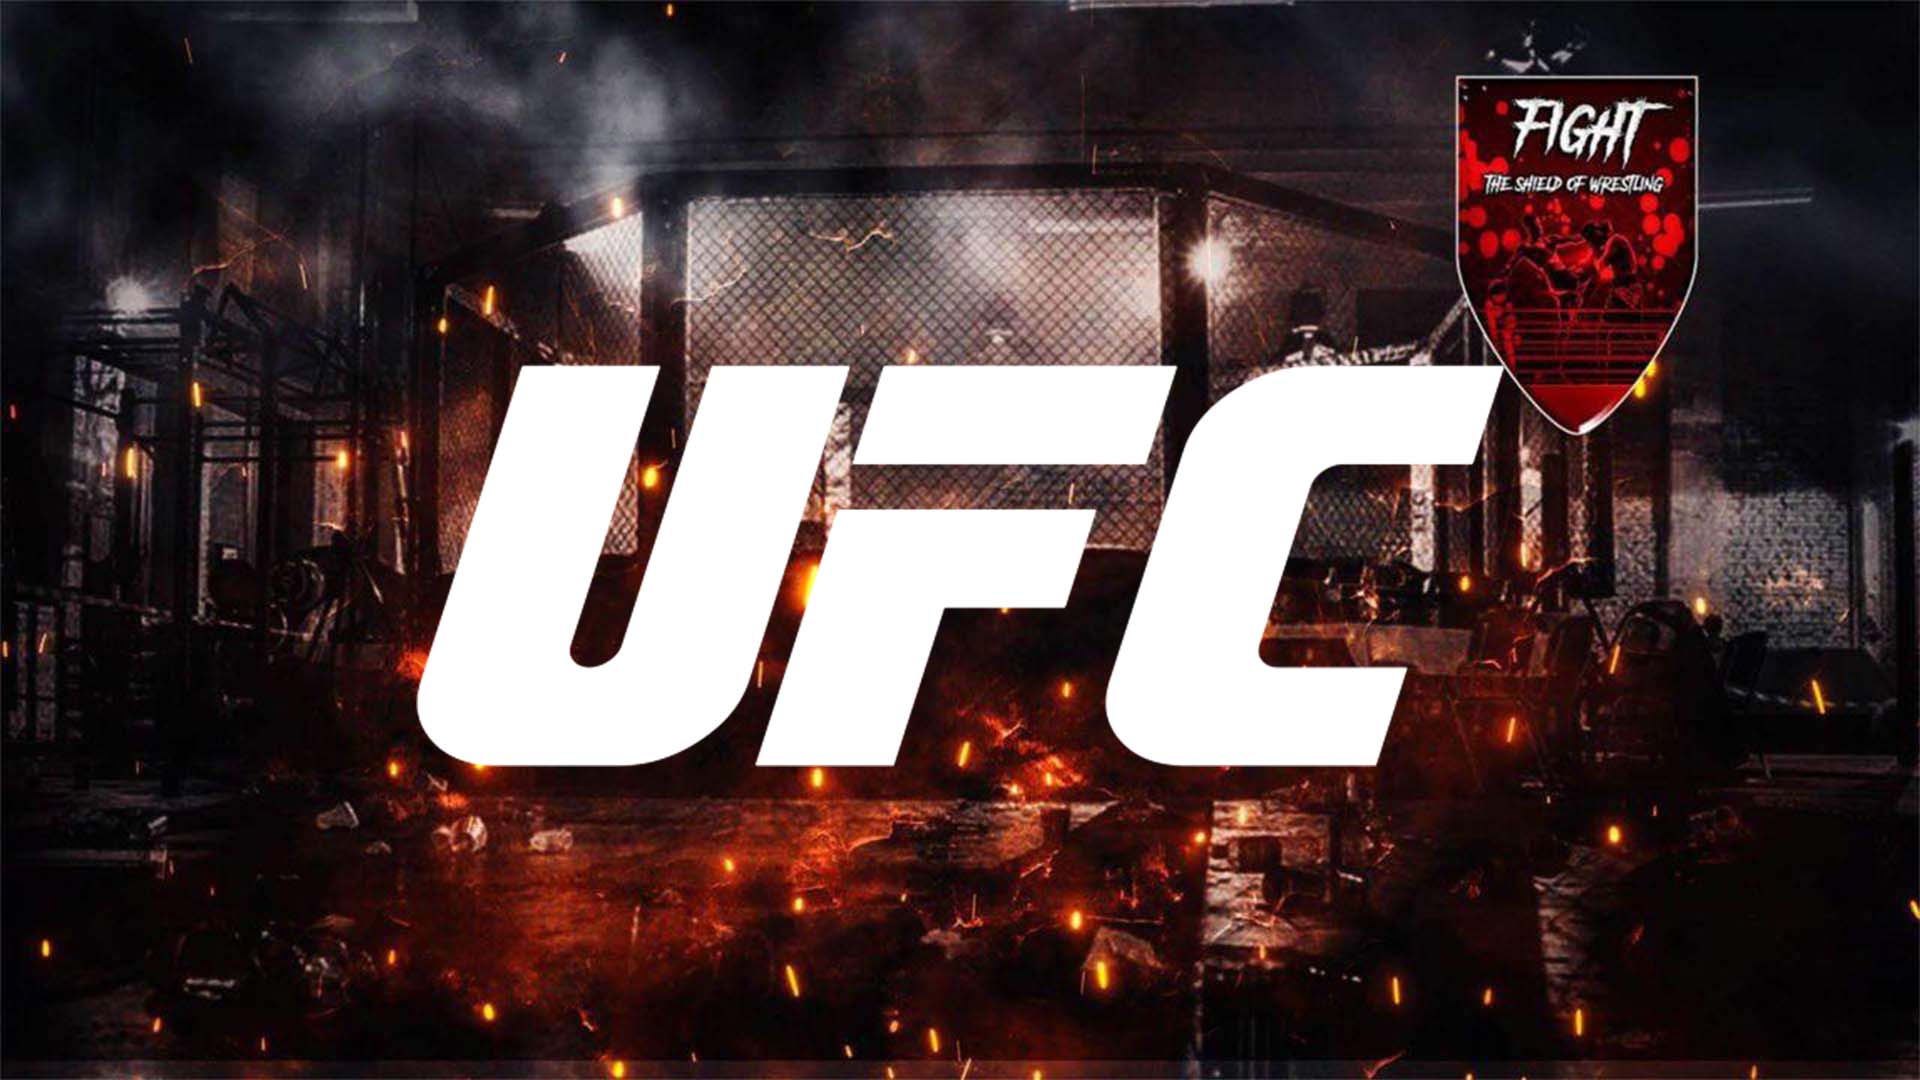 Volkan Oezdemir vs Nikita Krylov annunciato per UFC 280